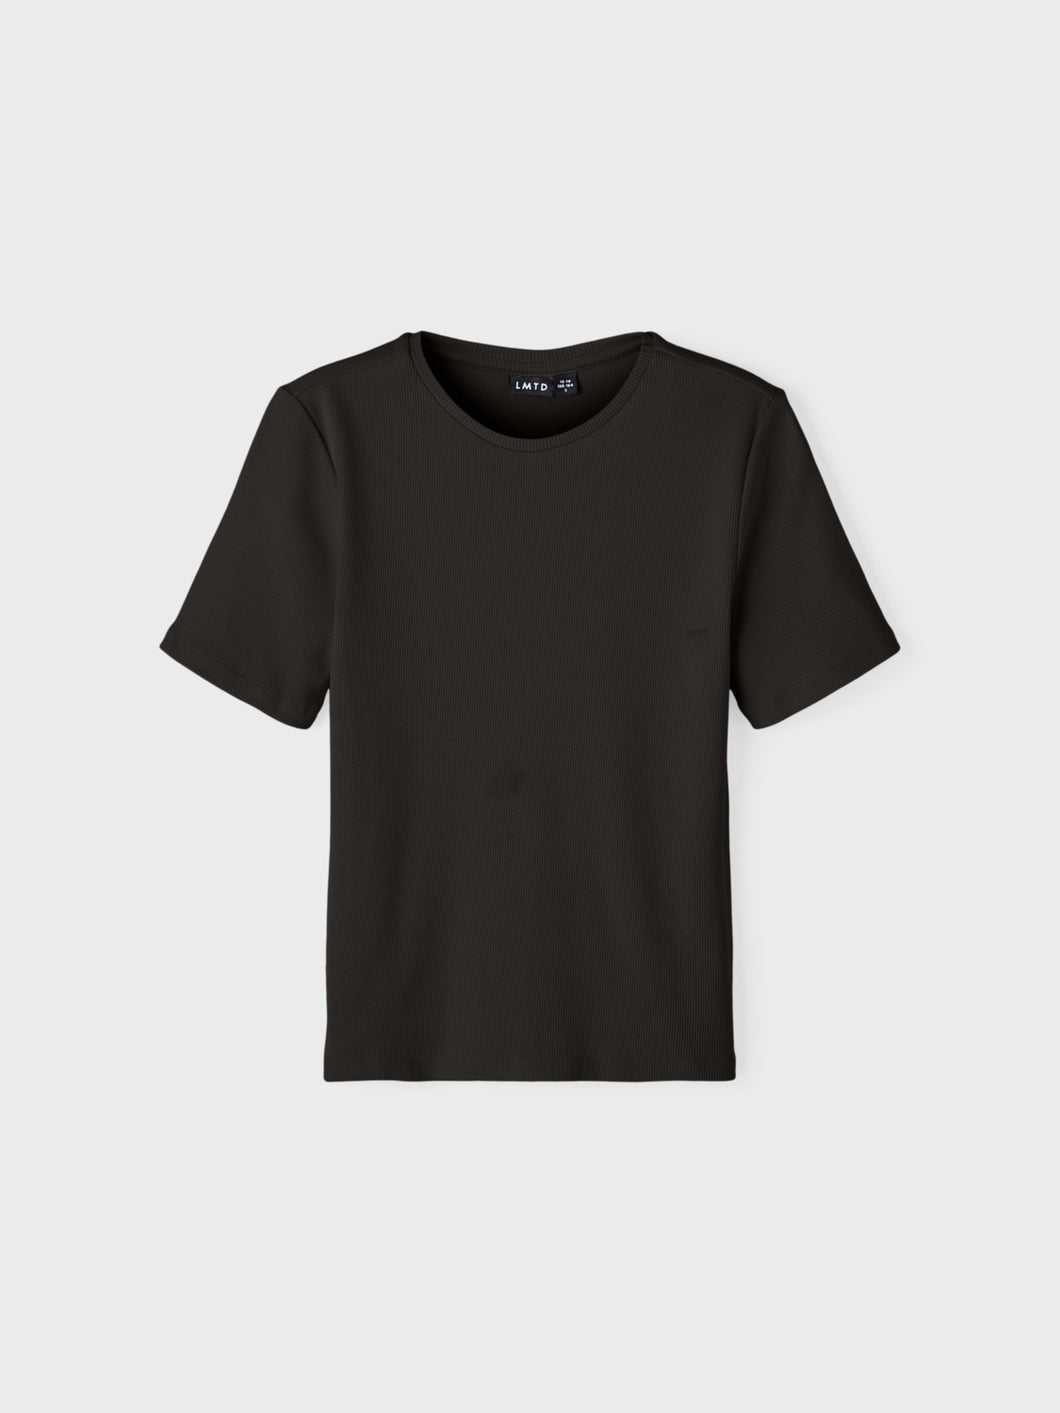 NLFDIDAS T-Shirts & Tops - Black